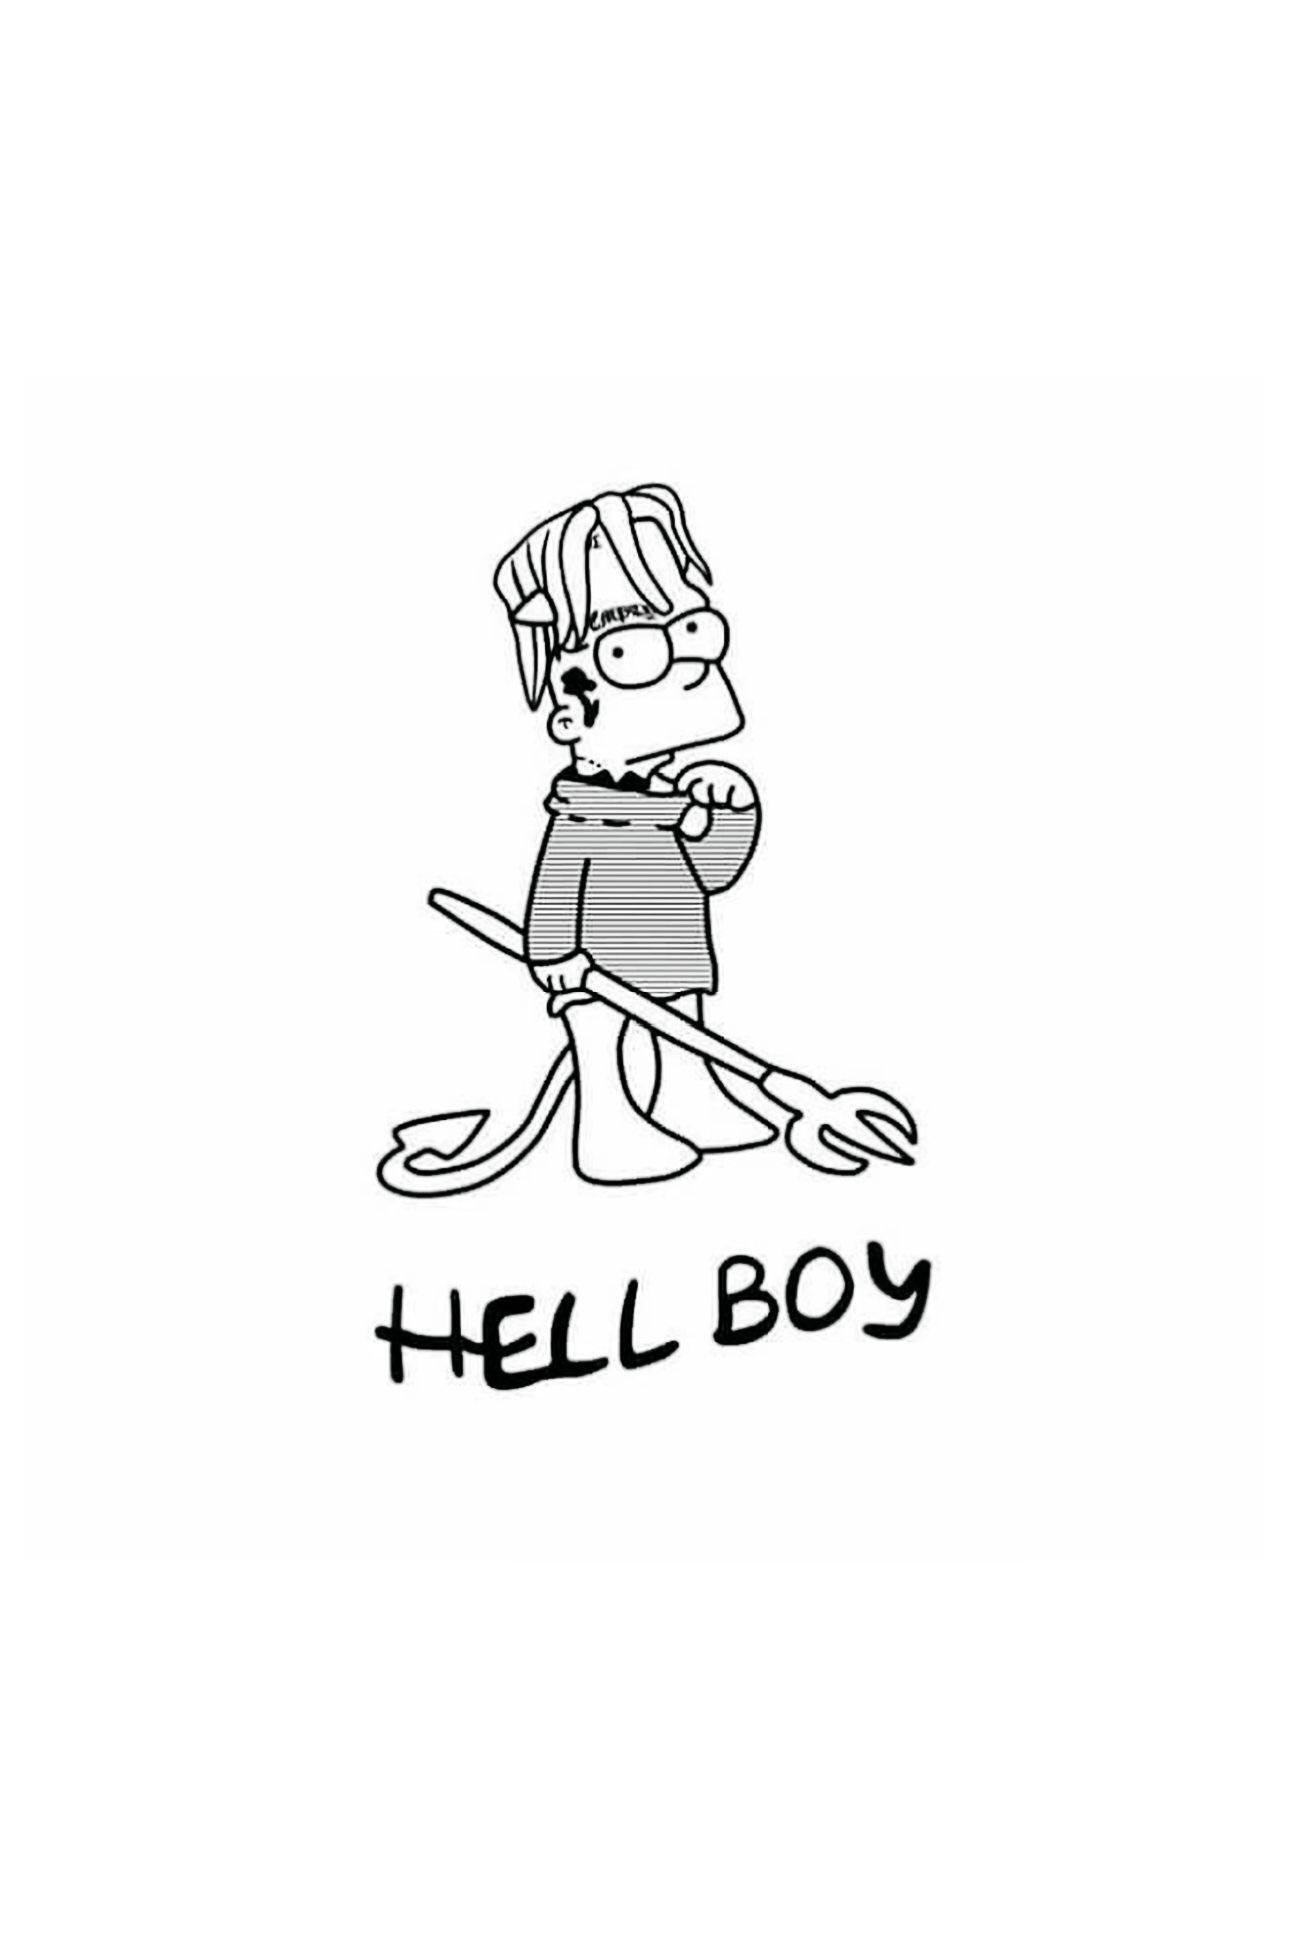 Hellboy (Lil Peep x Bart). Wallpaper Fits all phone sizes